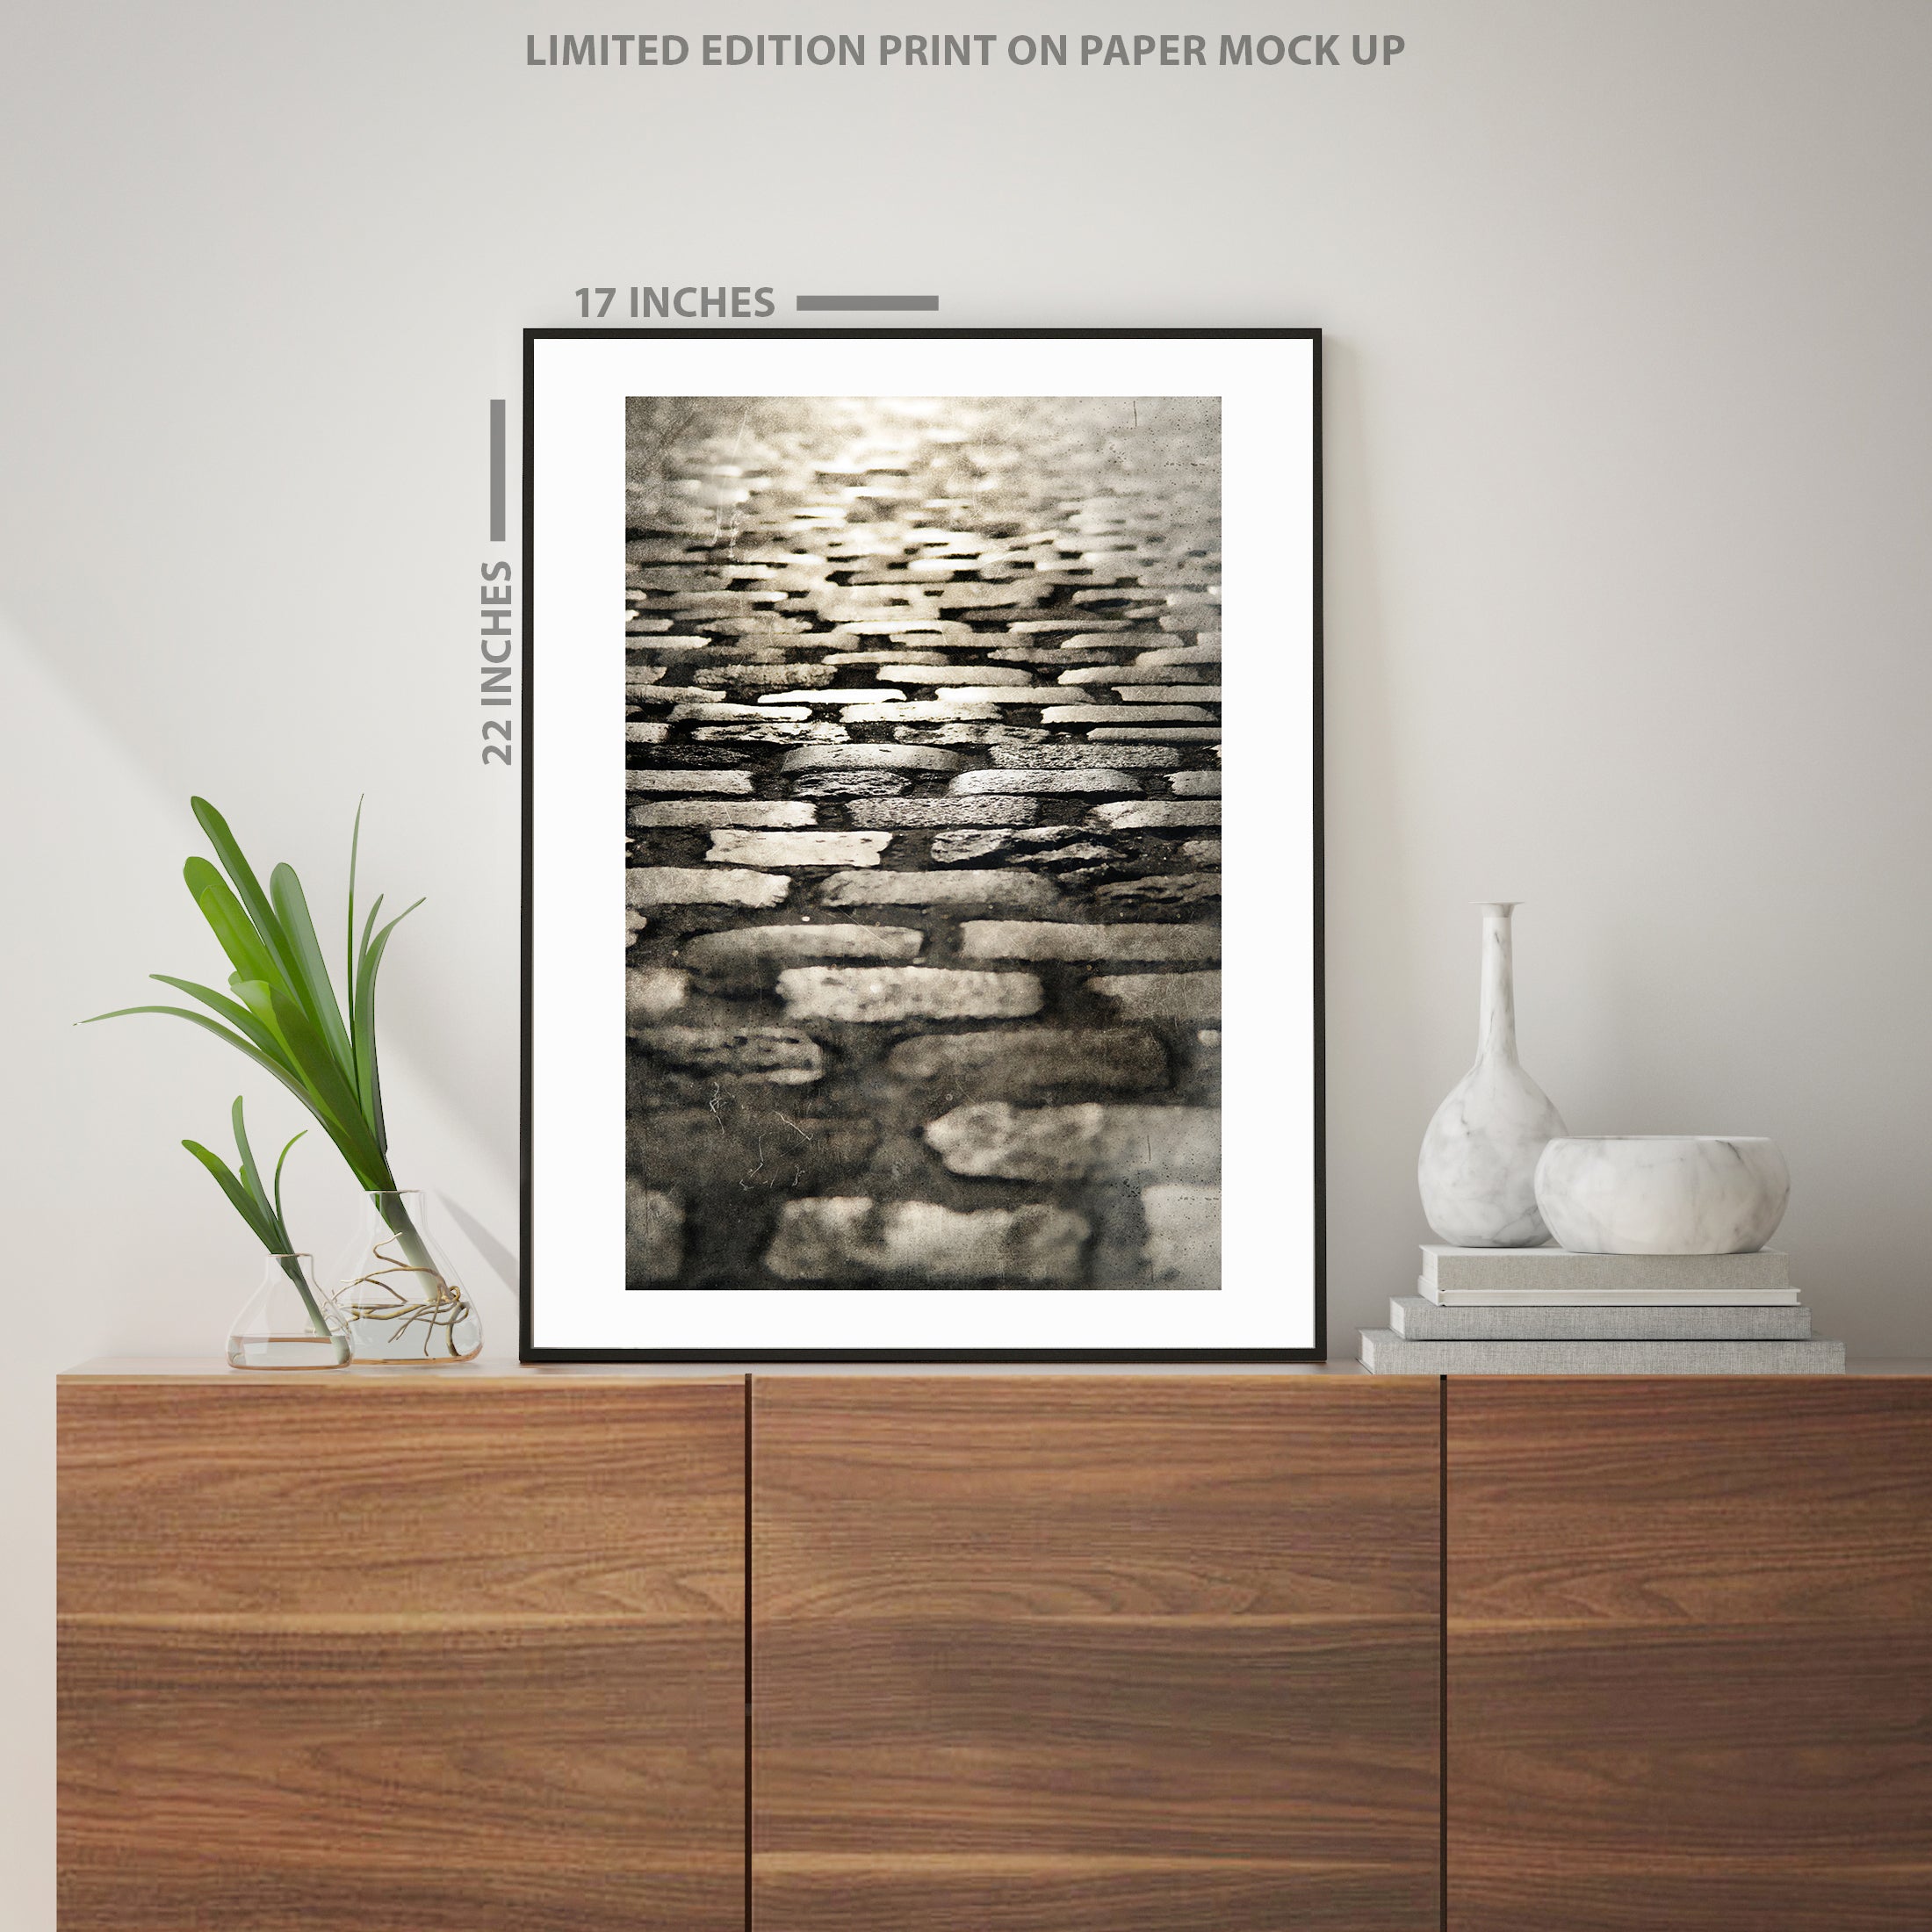 Brick Road, Barcelona, Limited Edition Print